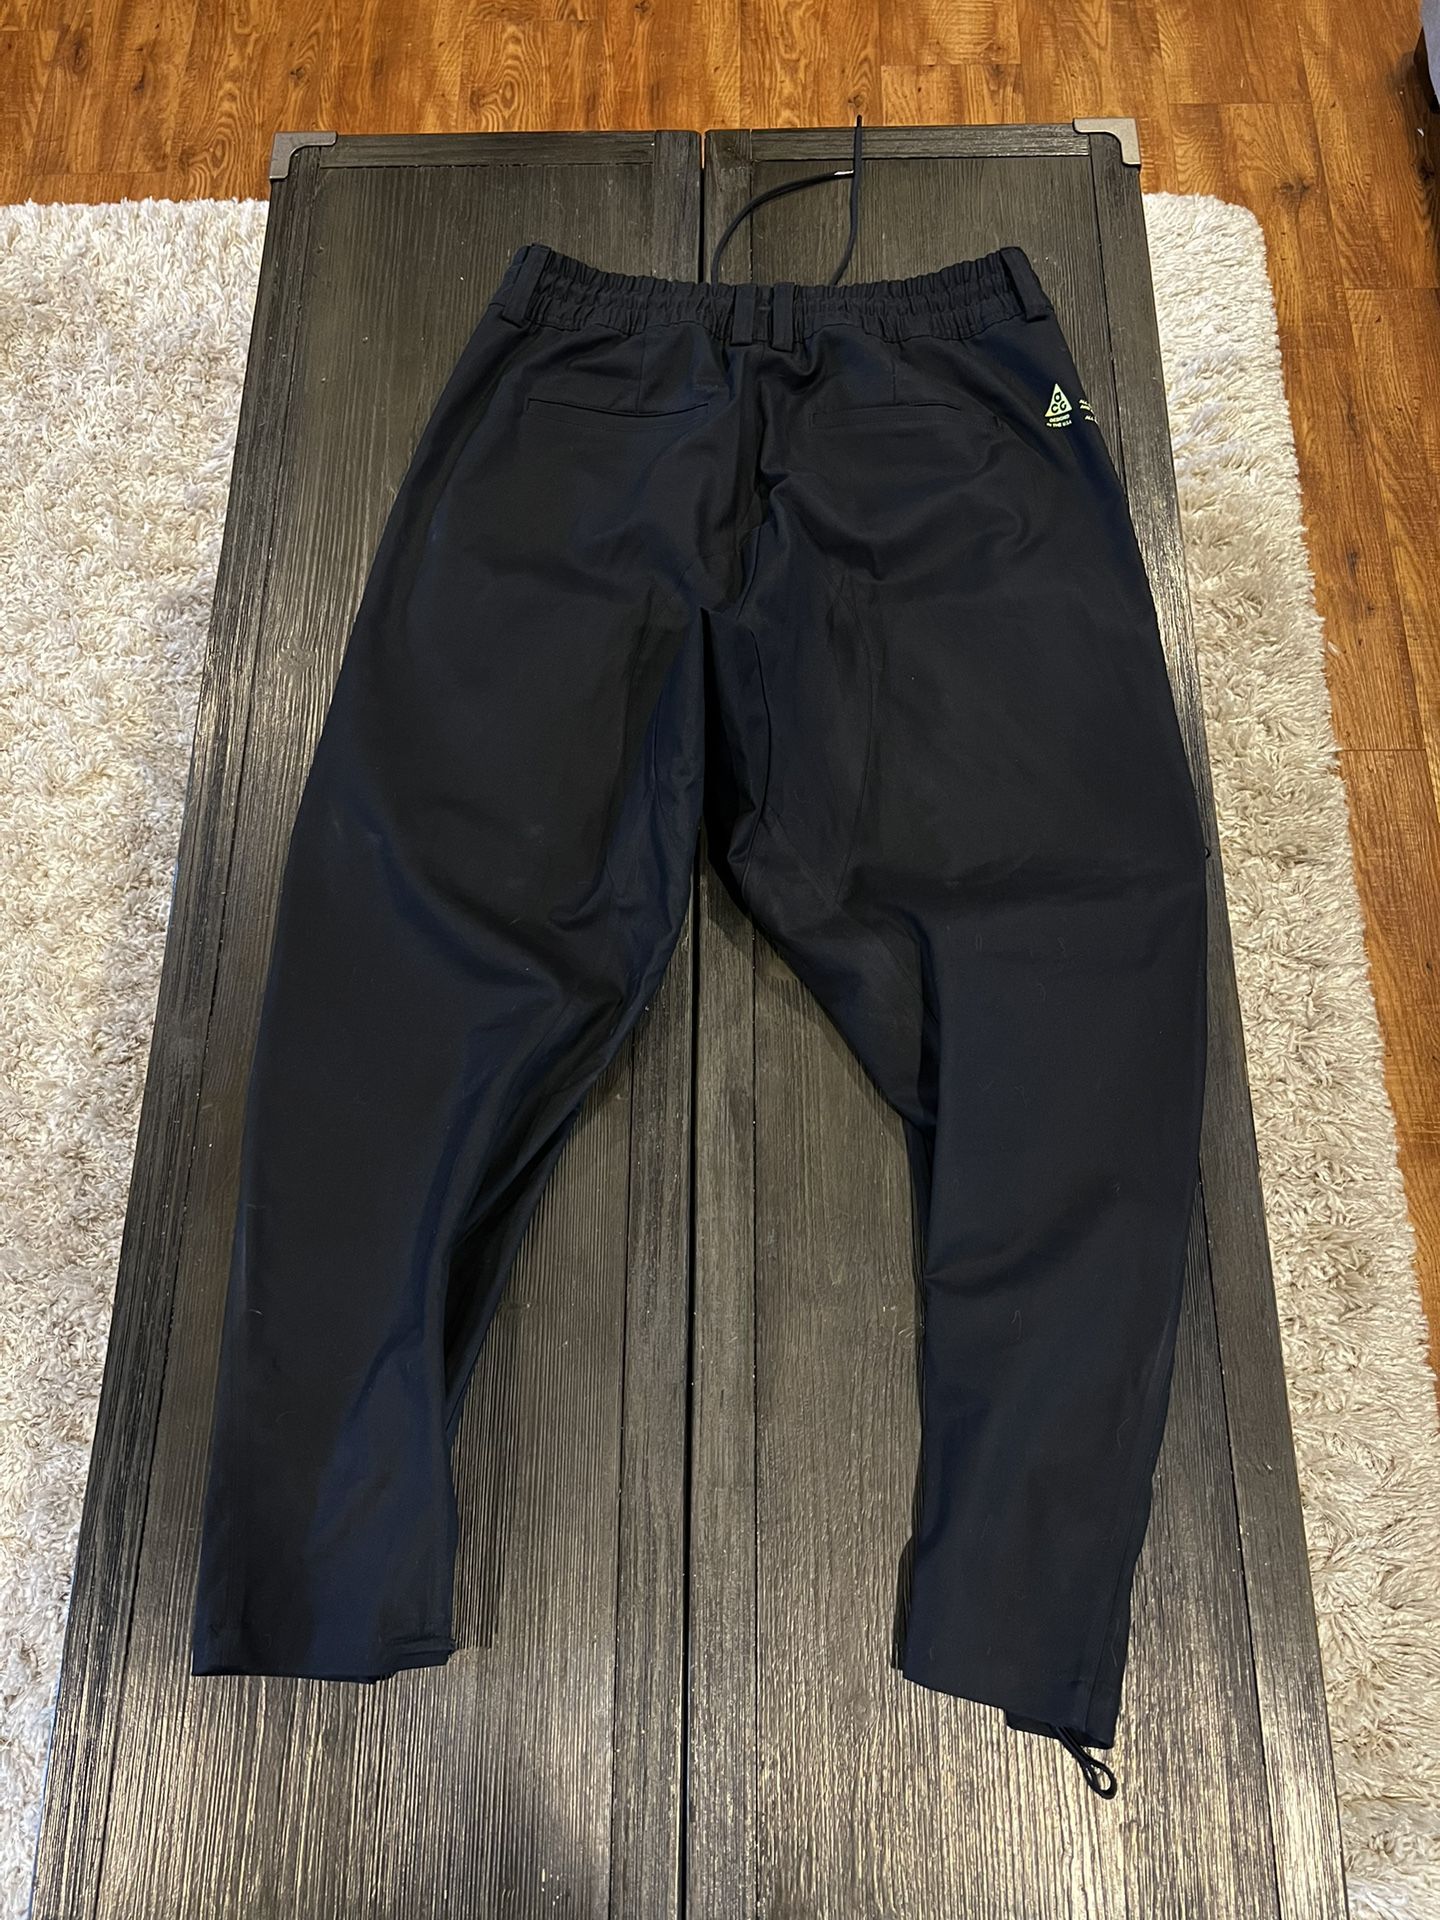 NikeLab ACG Black Cargo Pants AQ3524-010 Size Medium for Sale in